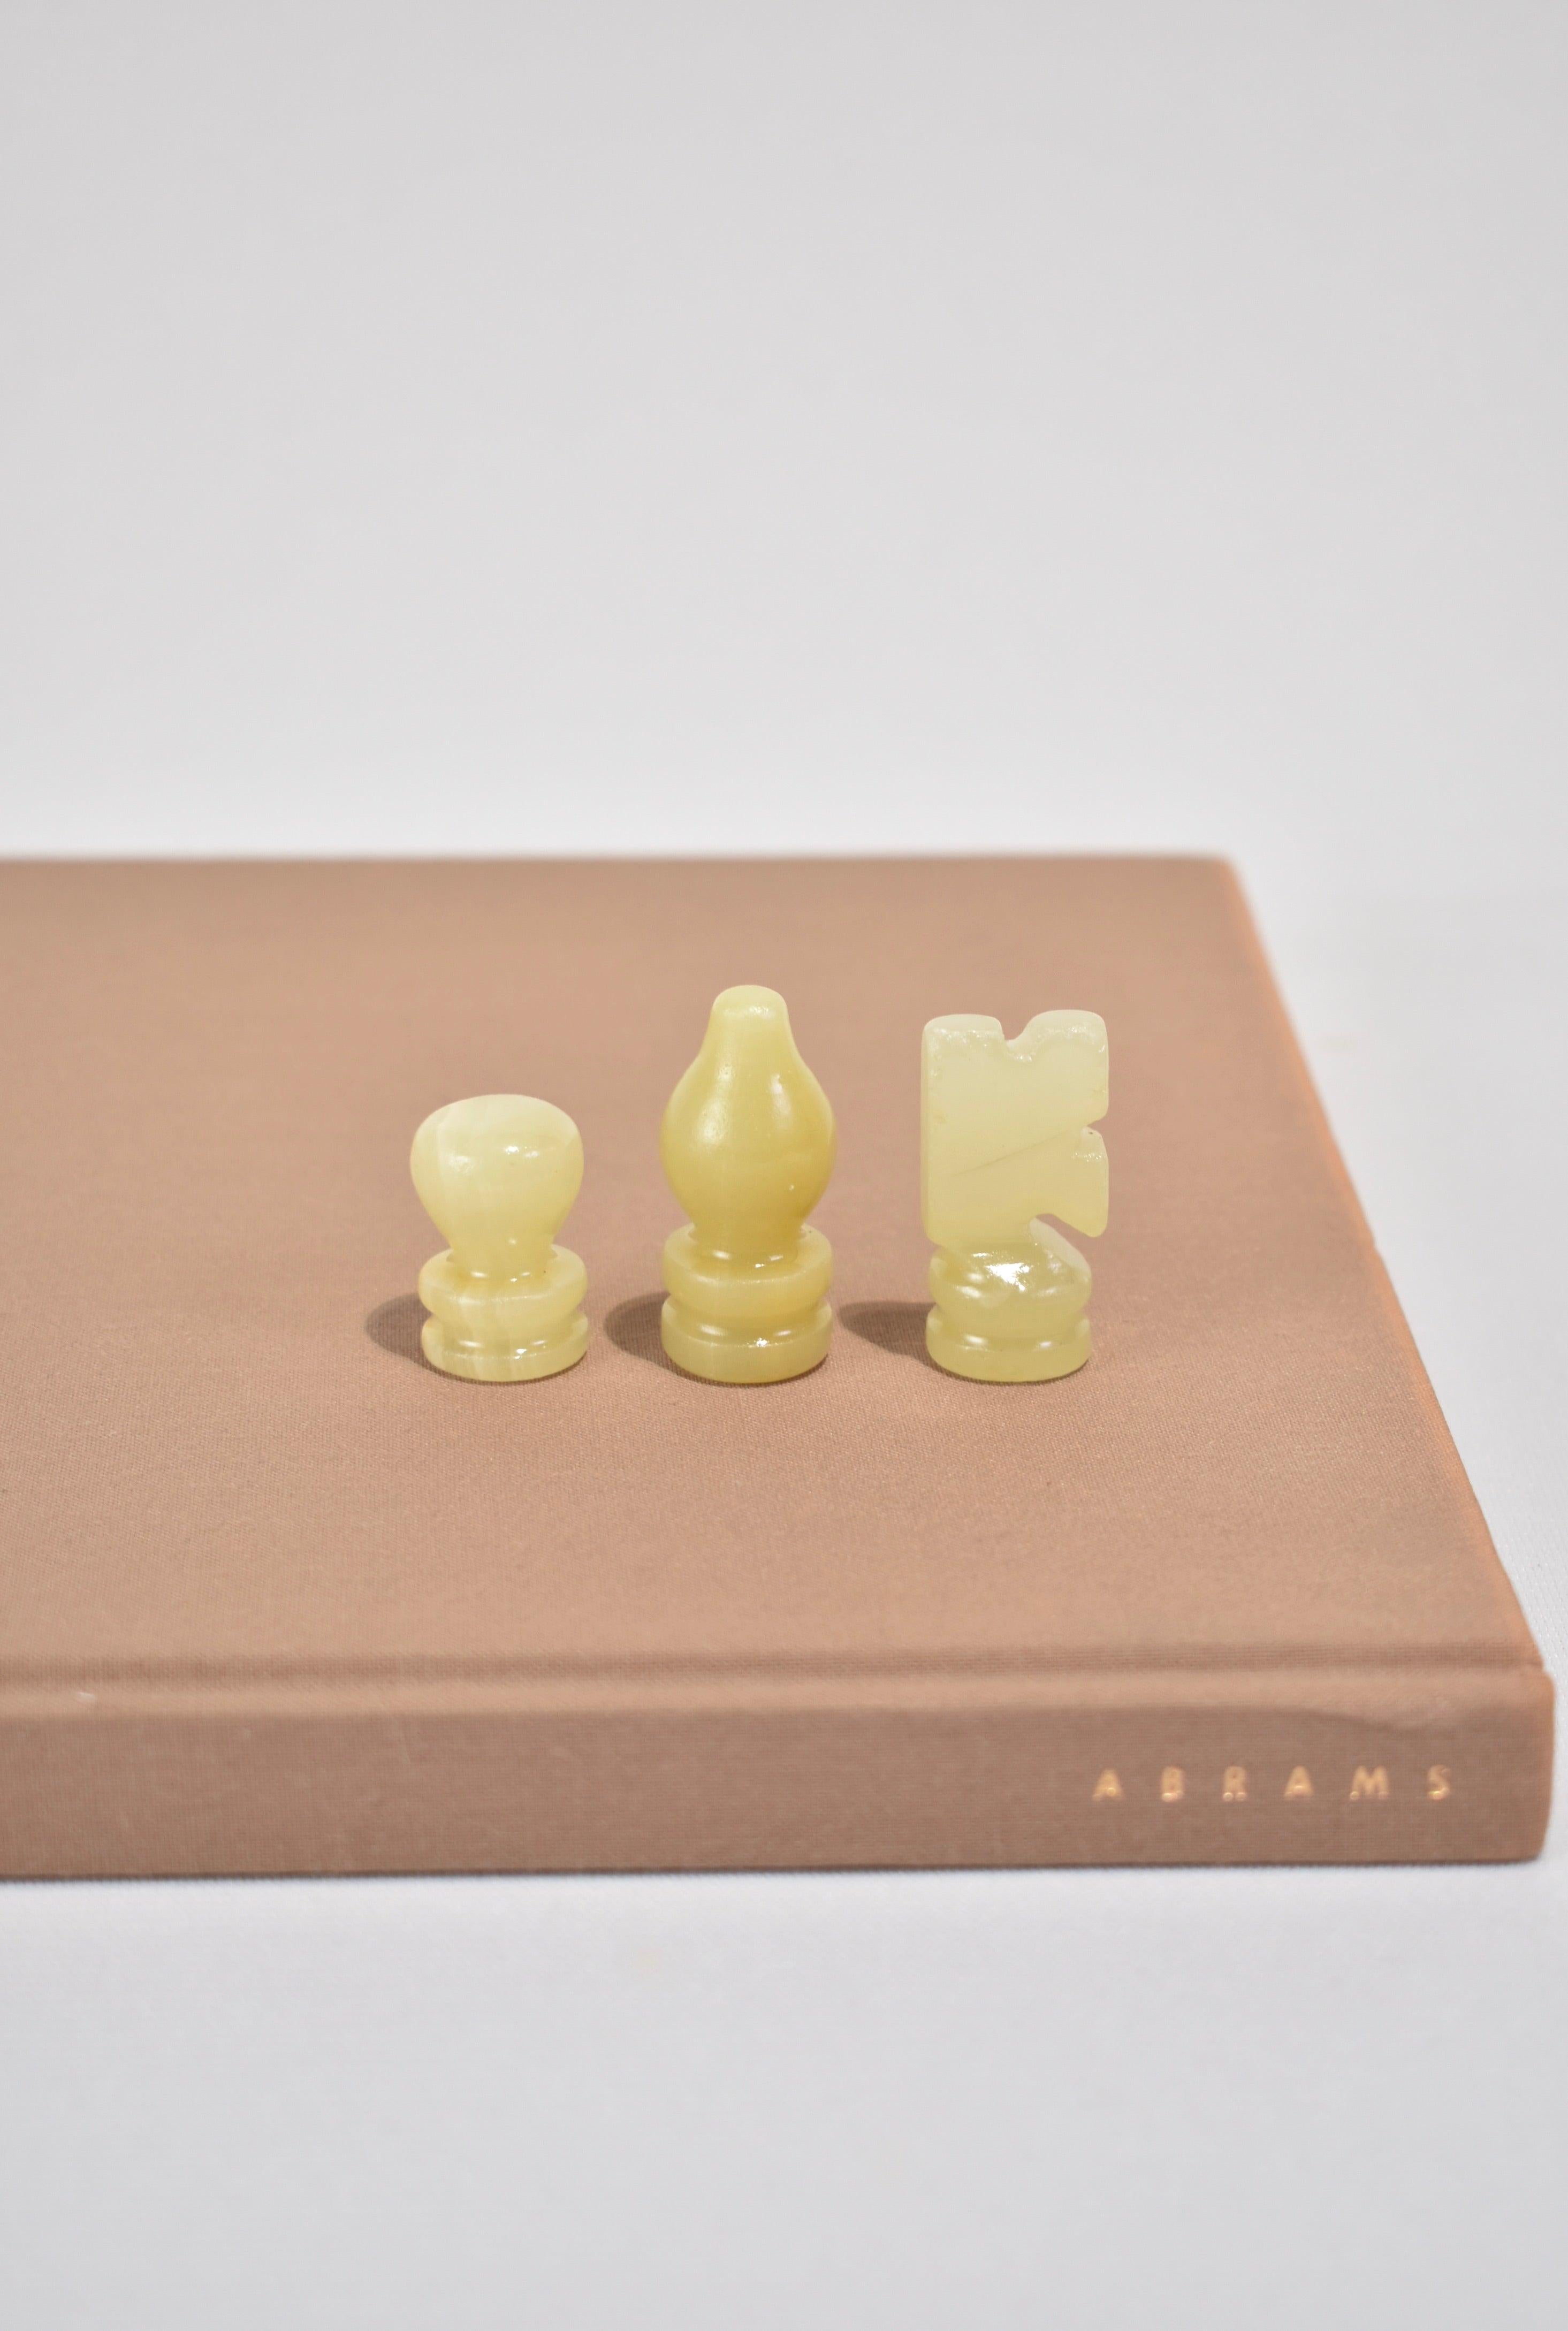 Brass Marble Chess Set